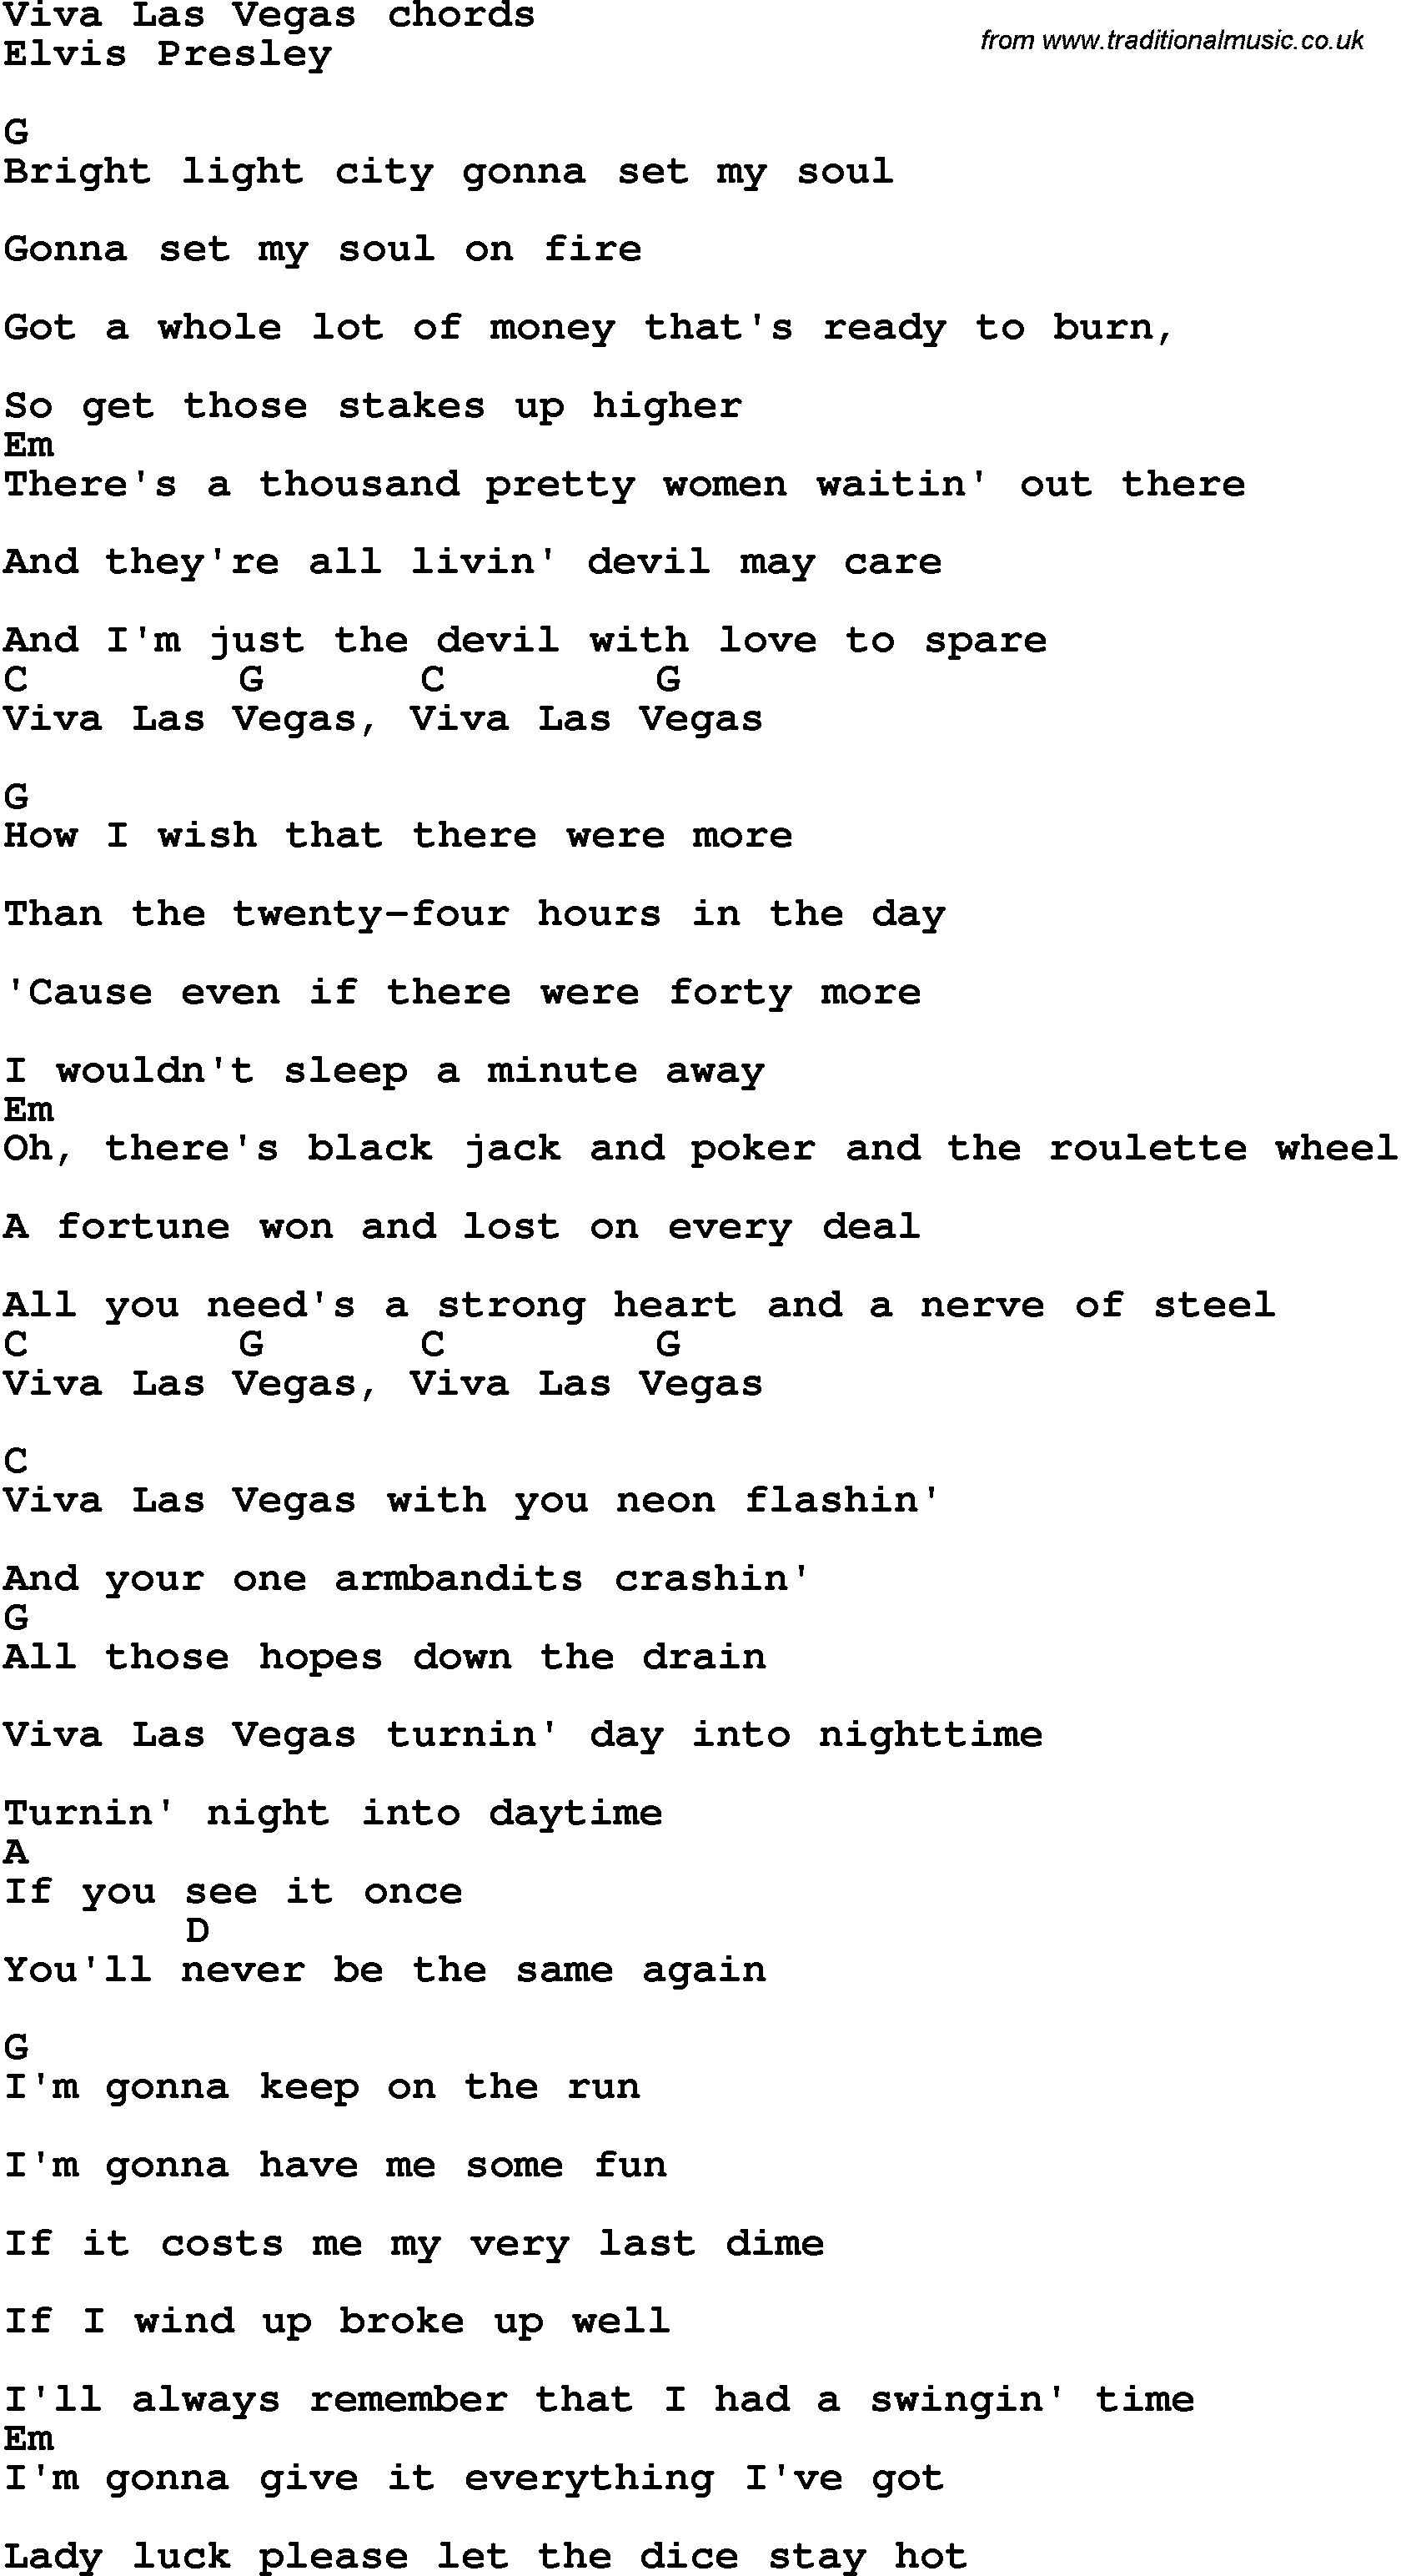 Song Lyrics with guitar chords for Viva Las Vegas